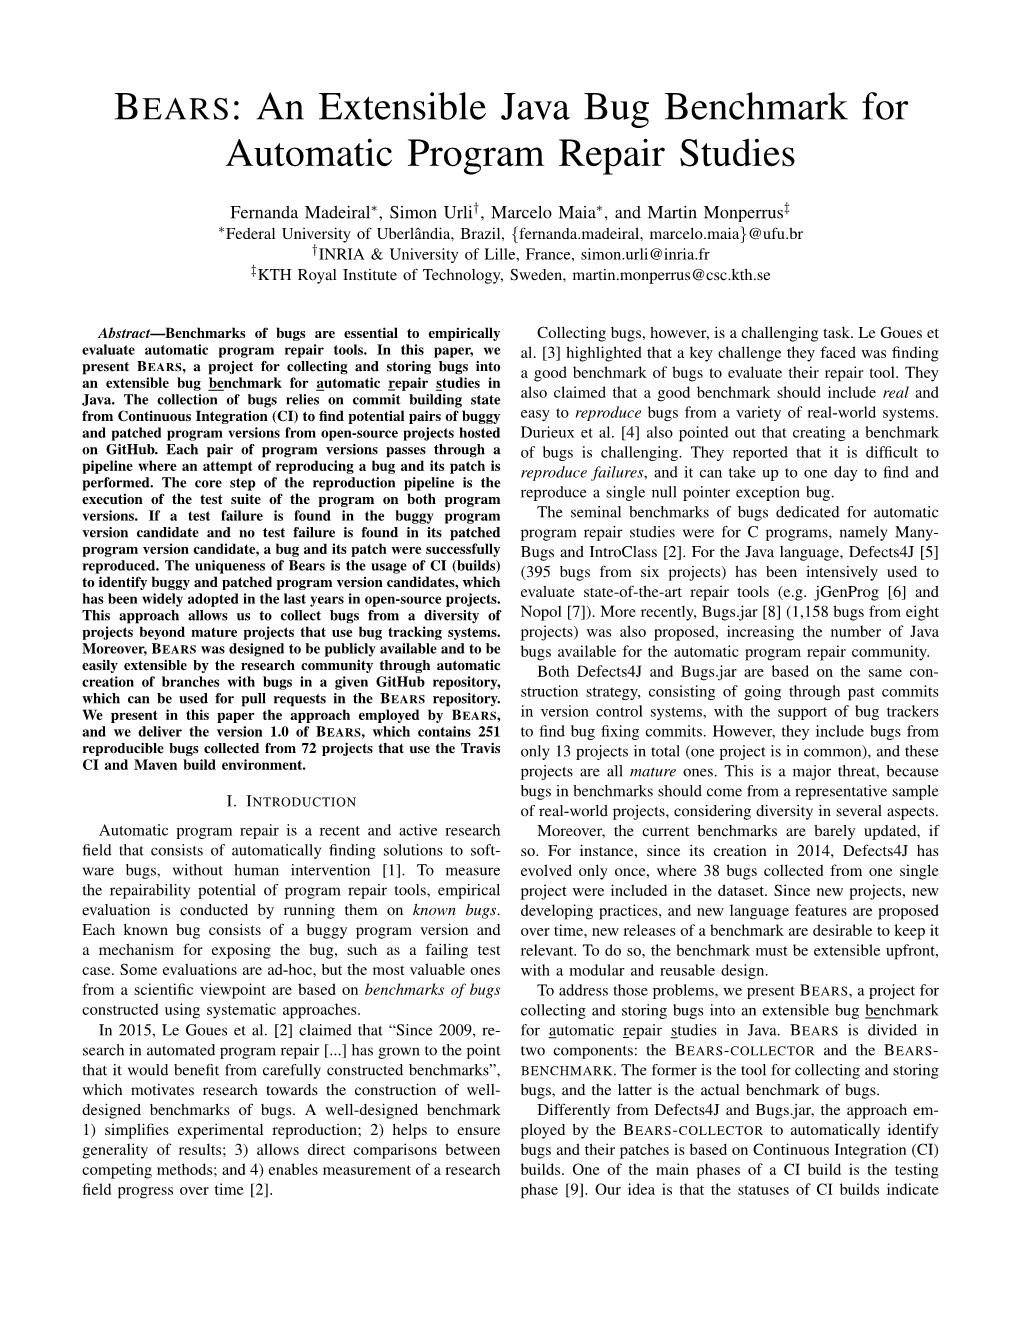 An Extensible Java Bug Benchmark for Automatic Program Repair Studies